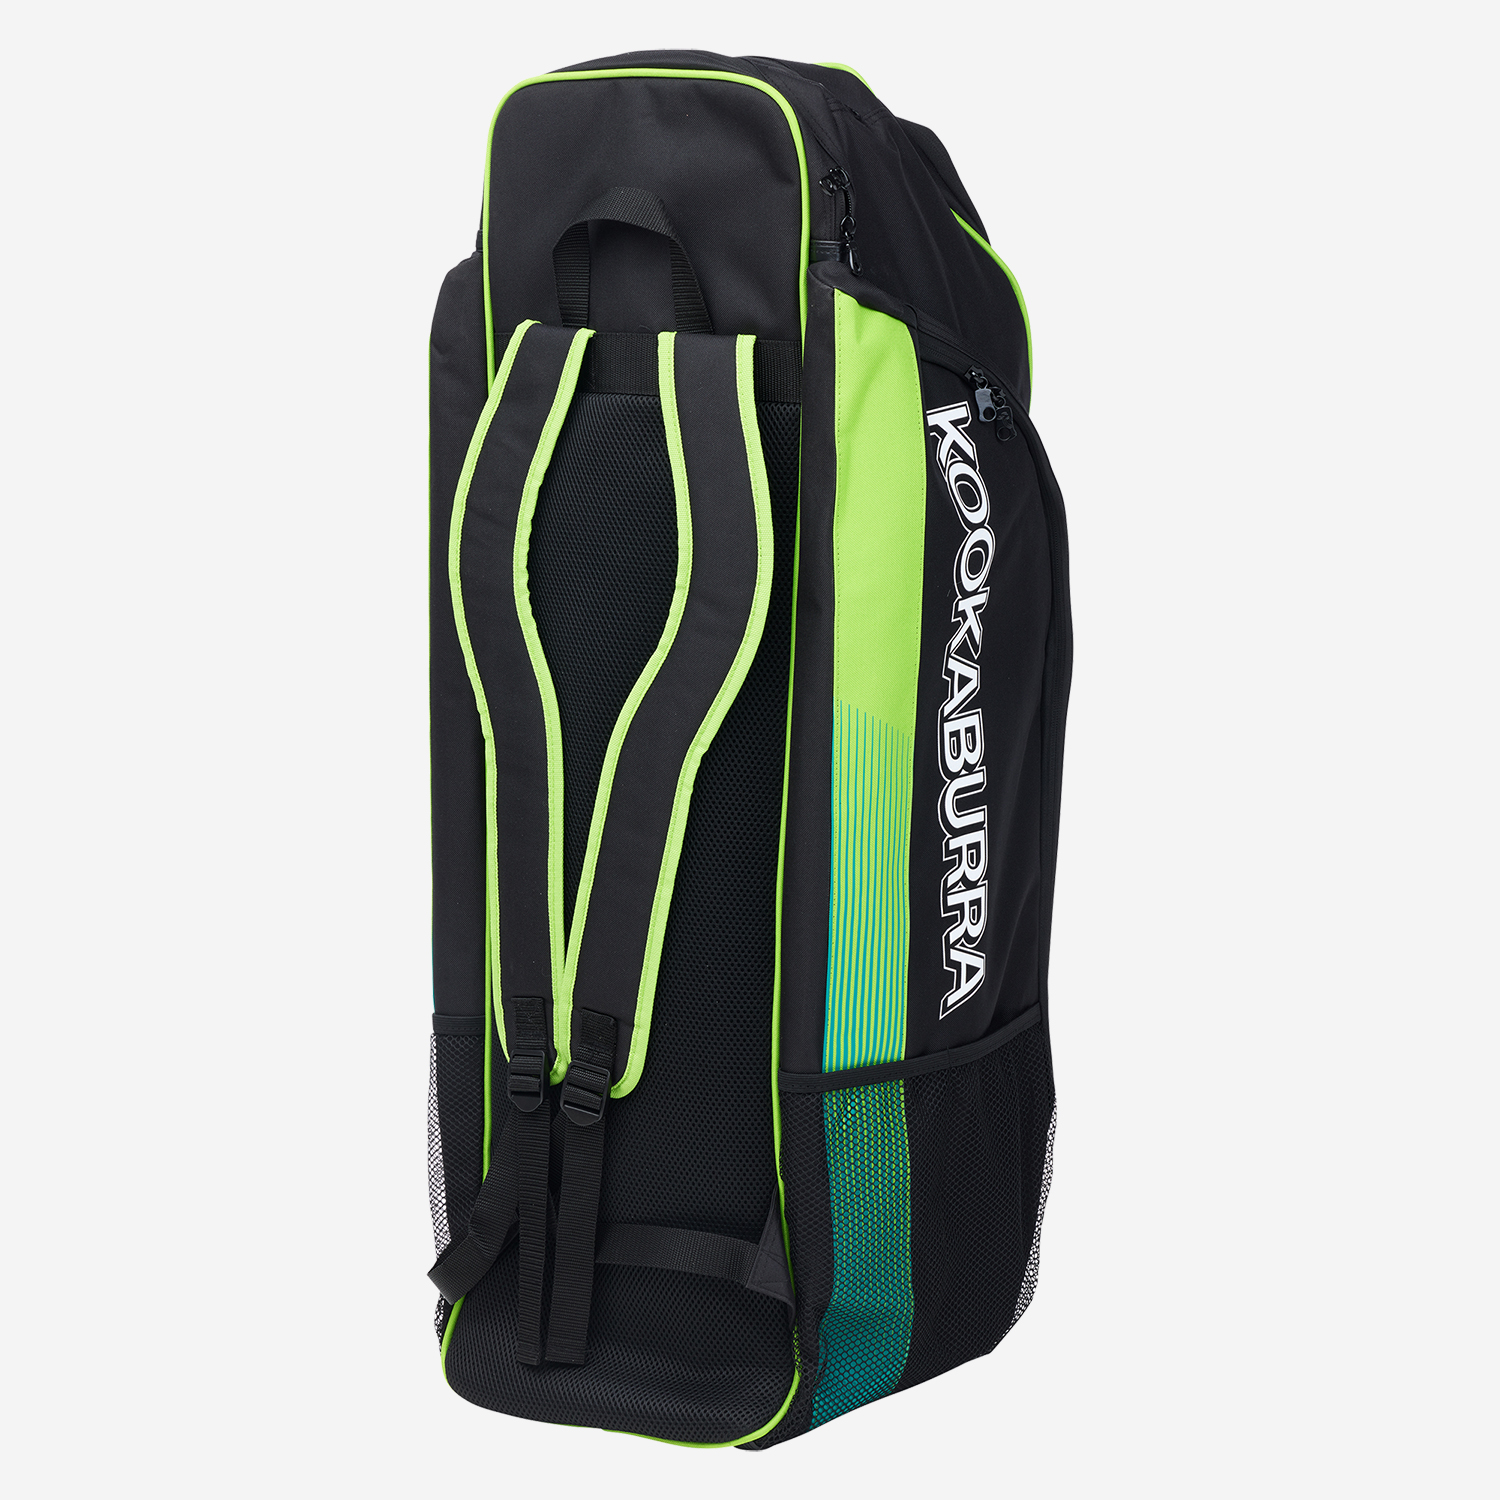 Pro 1.0 Duffle Cricket Bag